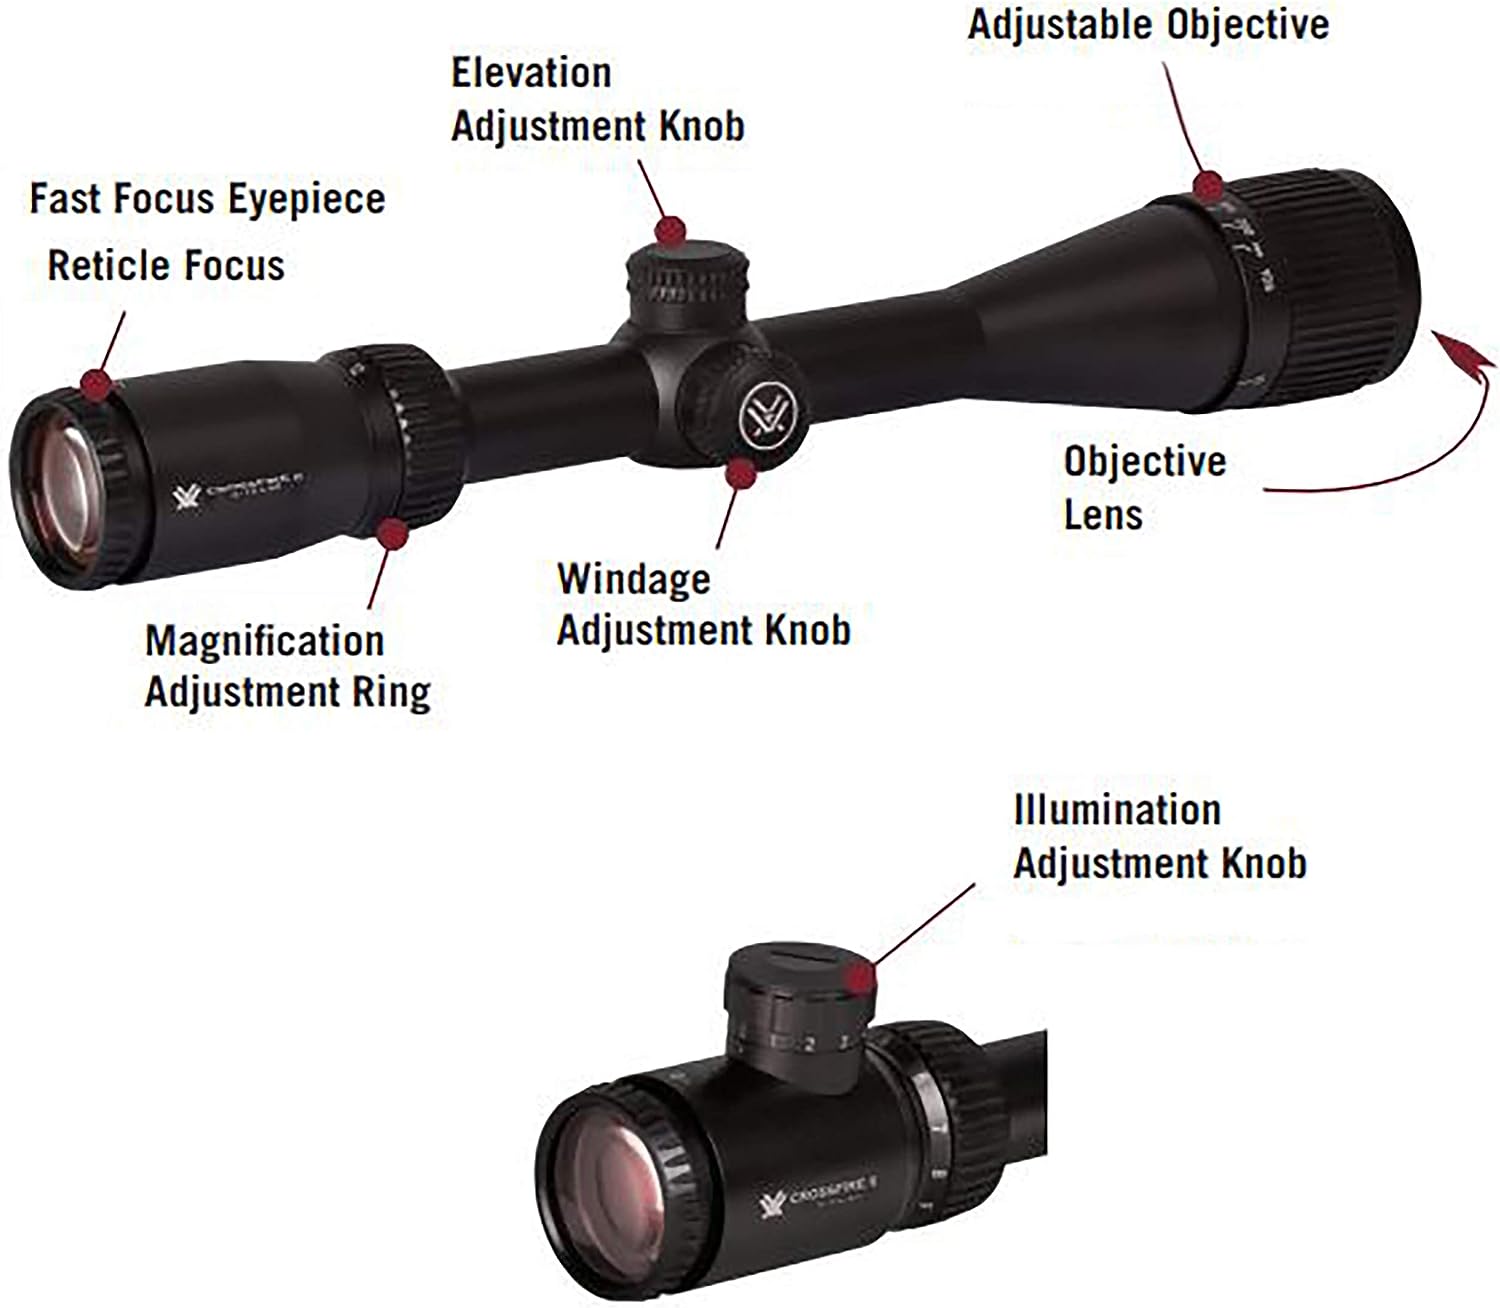 Vortex Optics Crossfire II Adjustable Objective, Second Focal Plane, 1-inch Tube Riflescopes - Vortex Crossfire II Riflescope Review